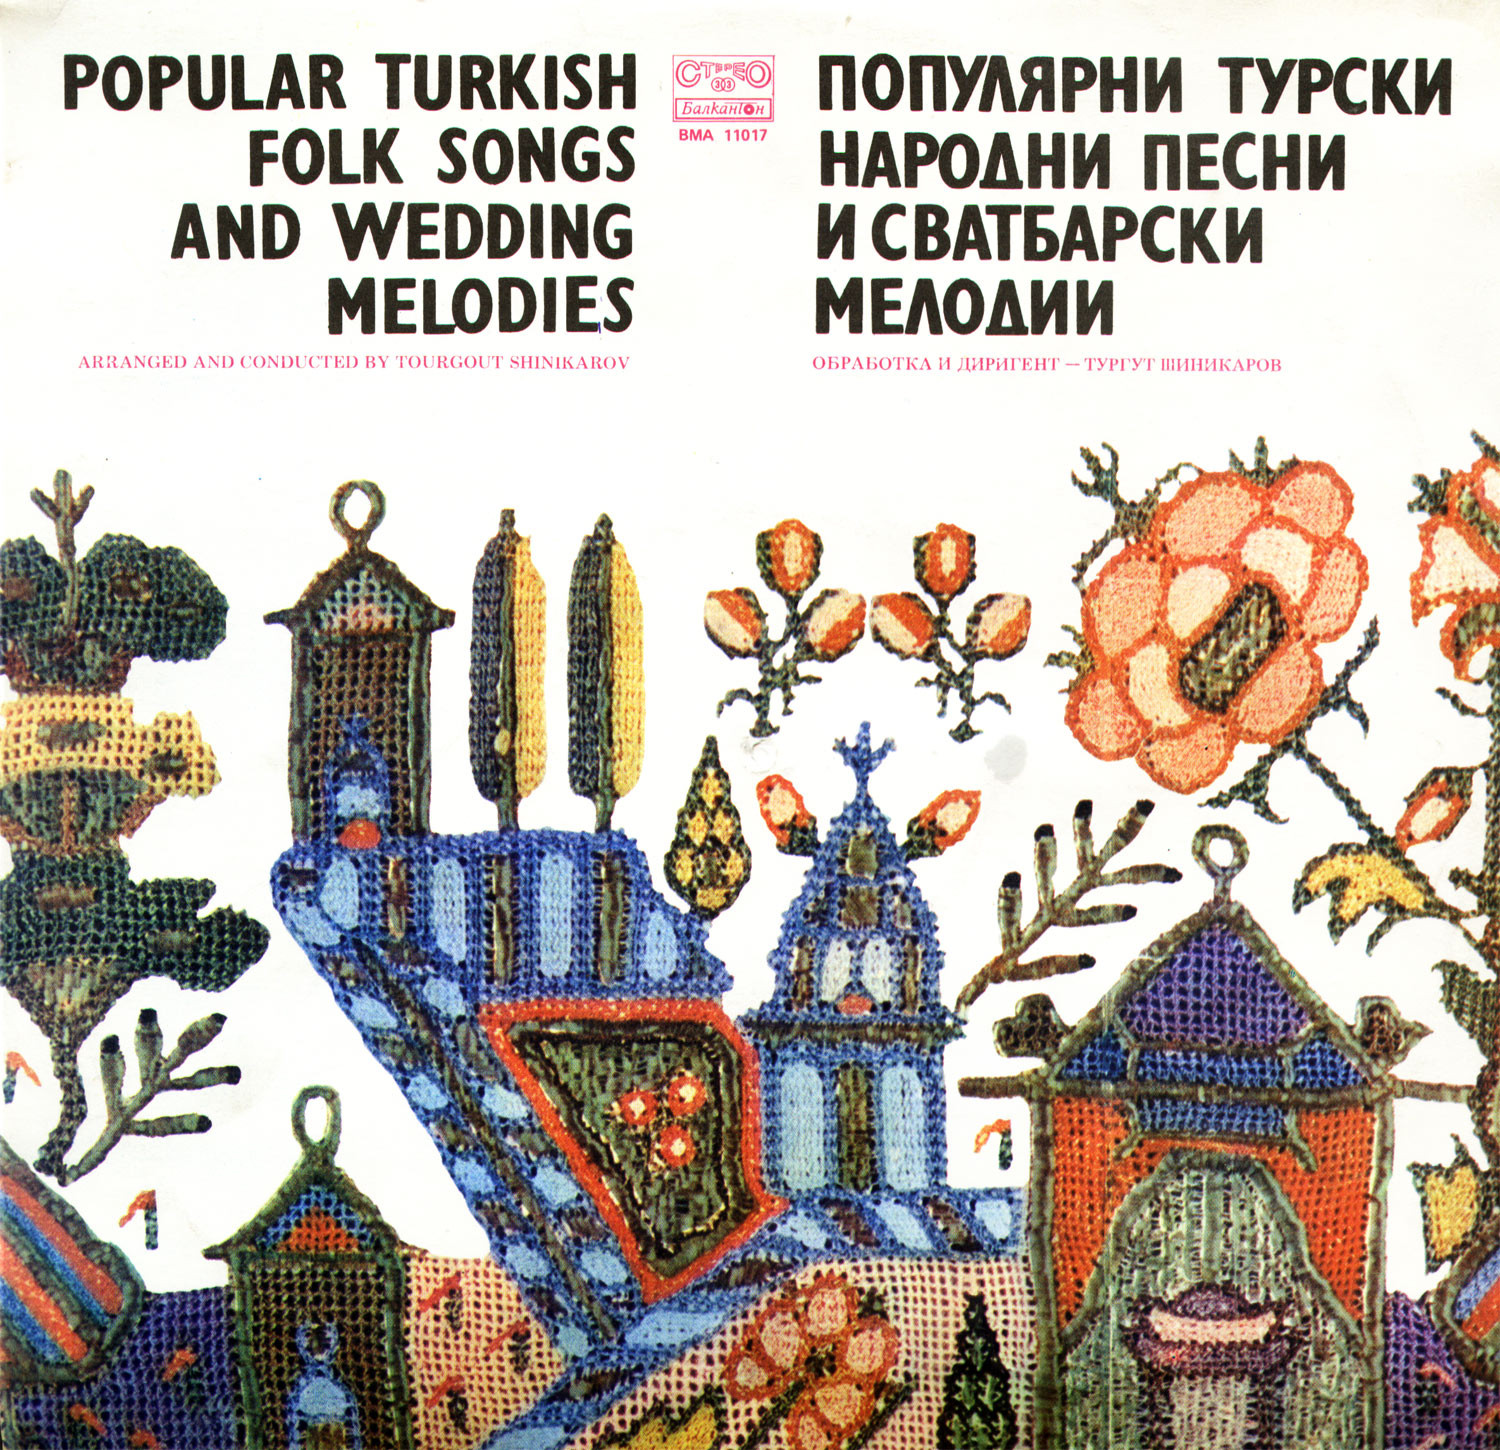 Популярни турски народни песни и сватбарски мелодии